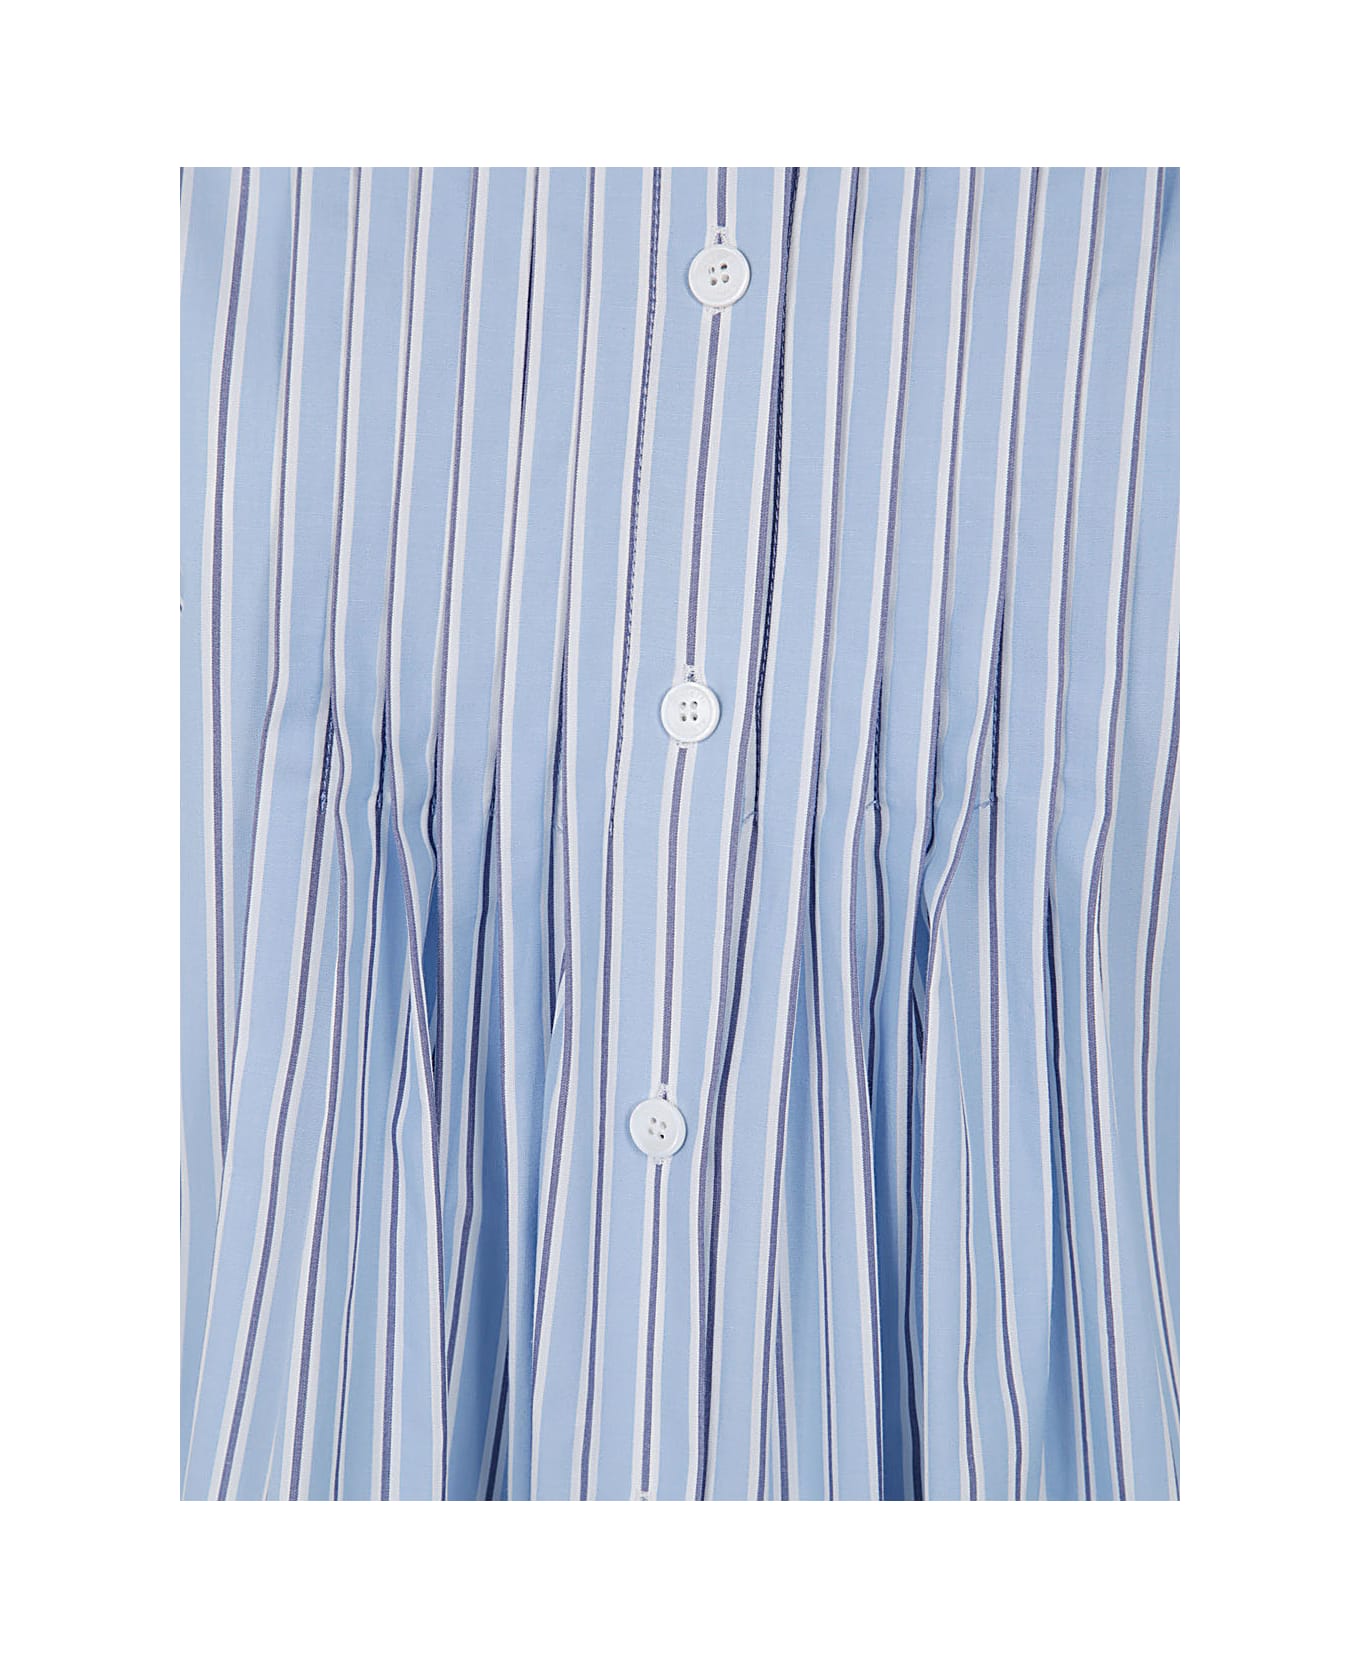 Alberta Ferretti Oversized Striped Shirt - Light Blue